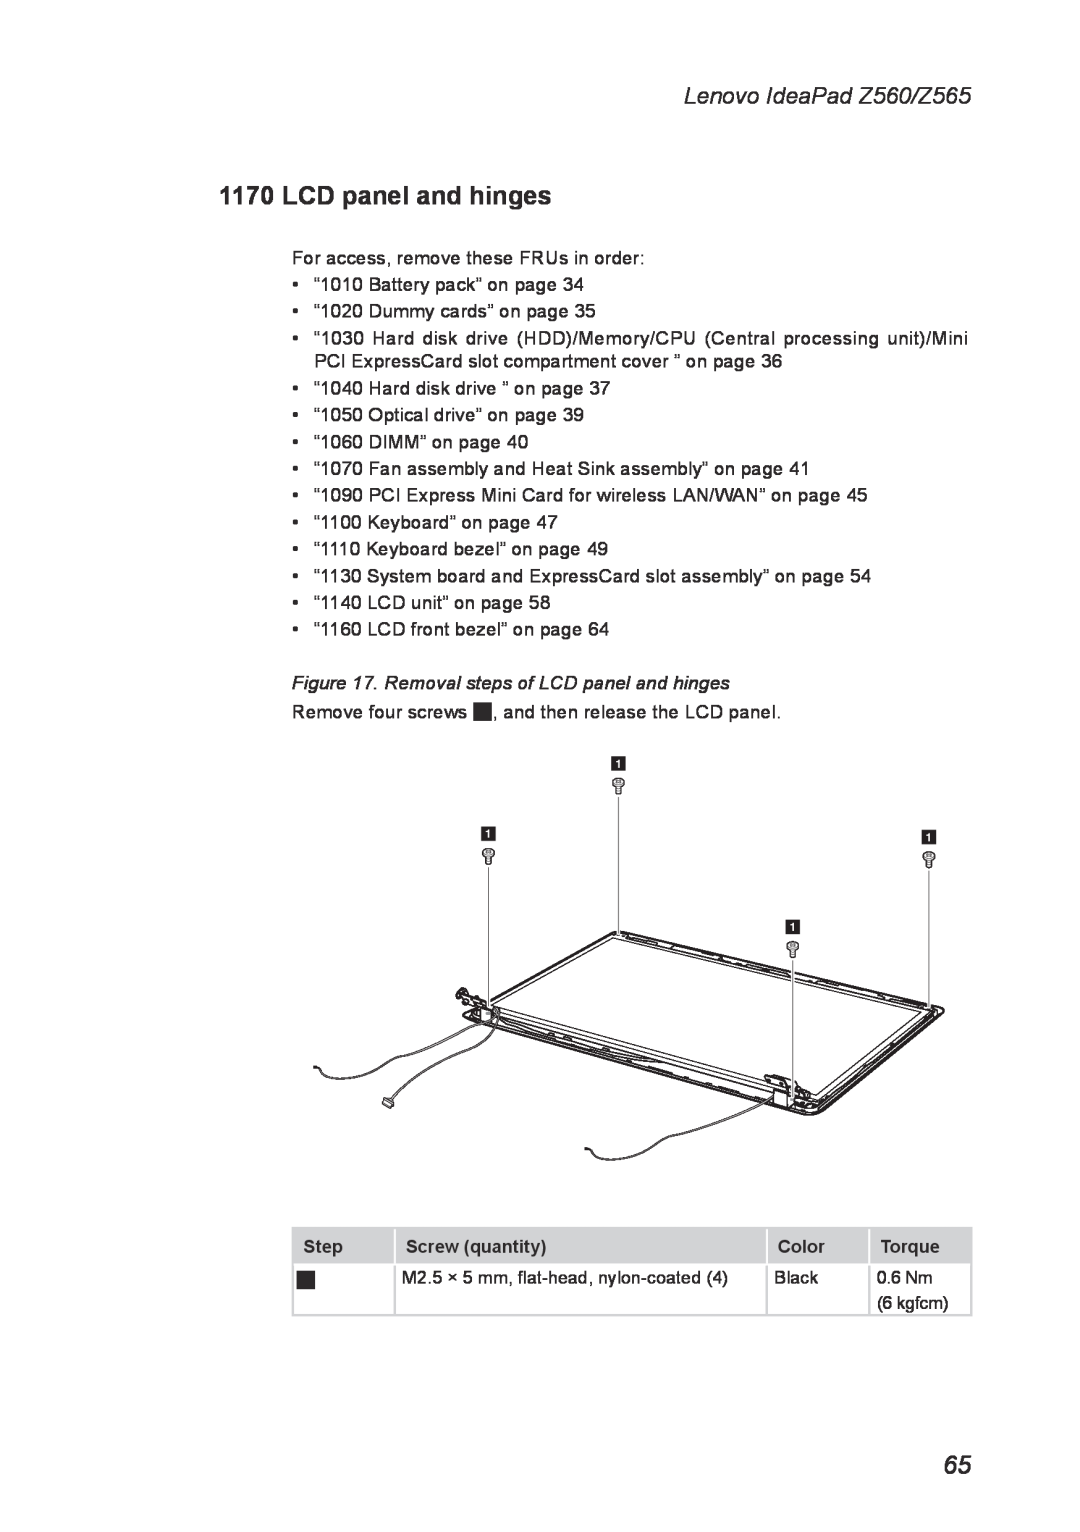 Lenovo manual Removal steps of LCD panel and hinges, Lenovo IdeaPad Z560/Z565 